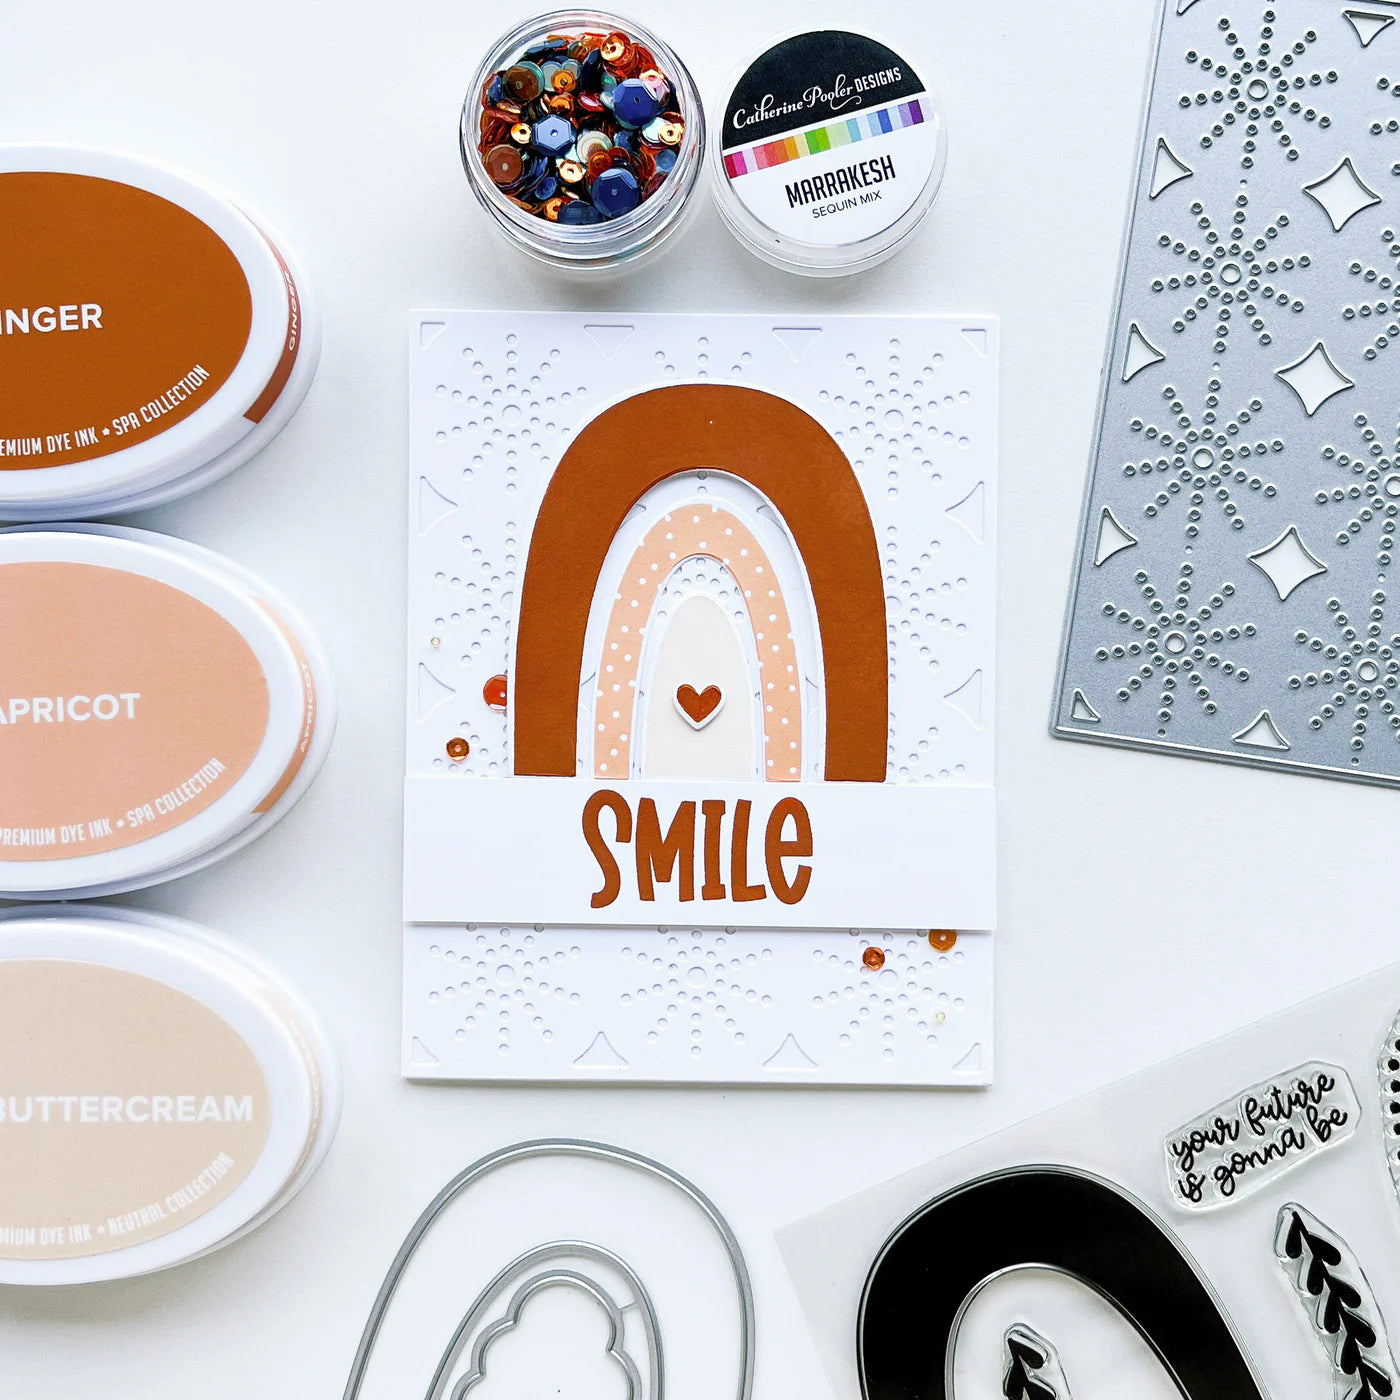 Smile Bright Rainbow Clear Stamp Set - Catherine Pooler Designs